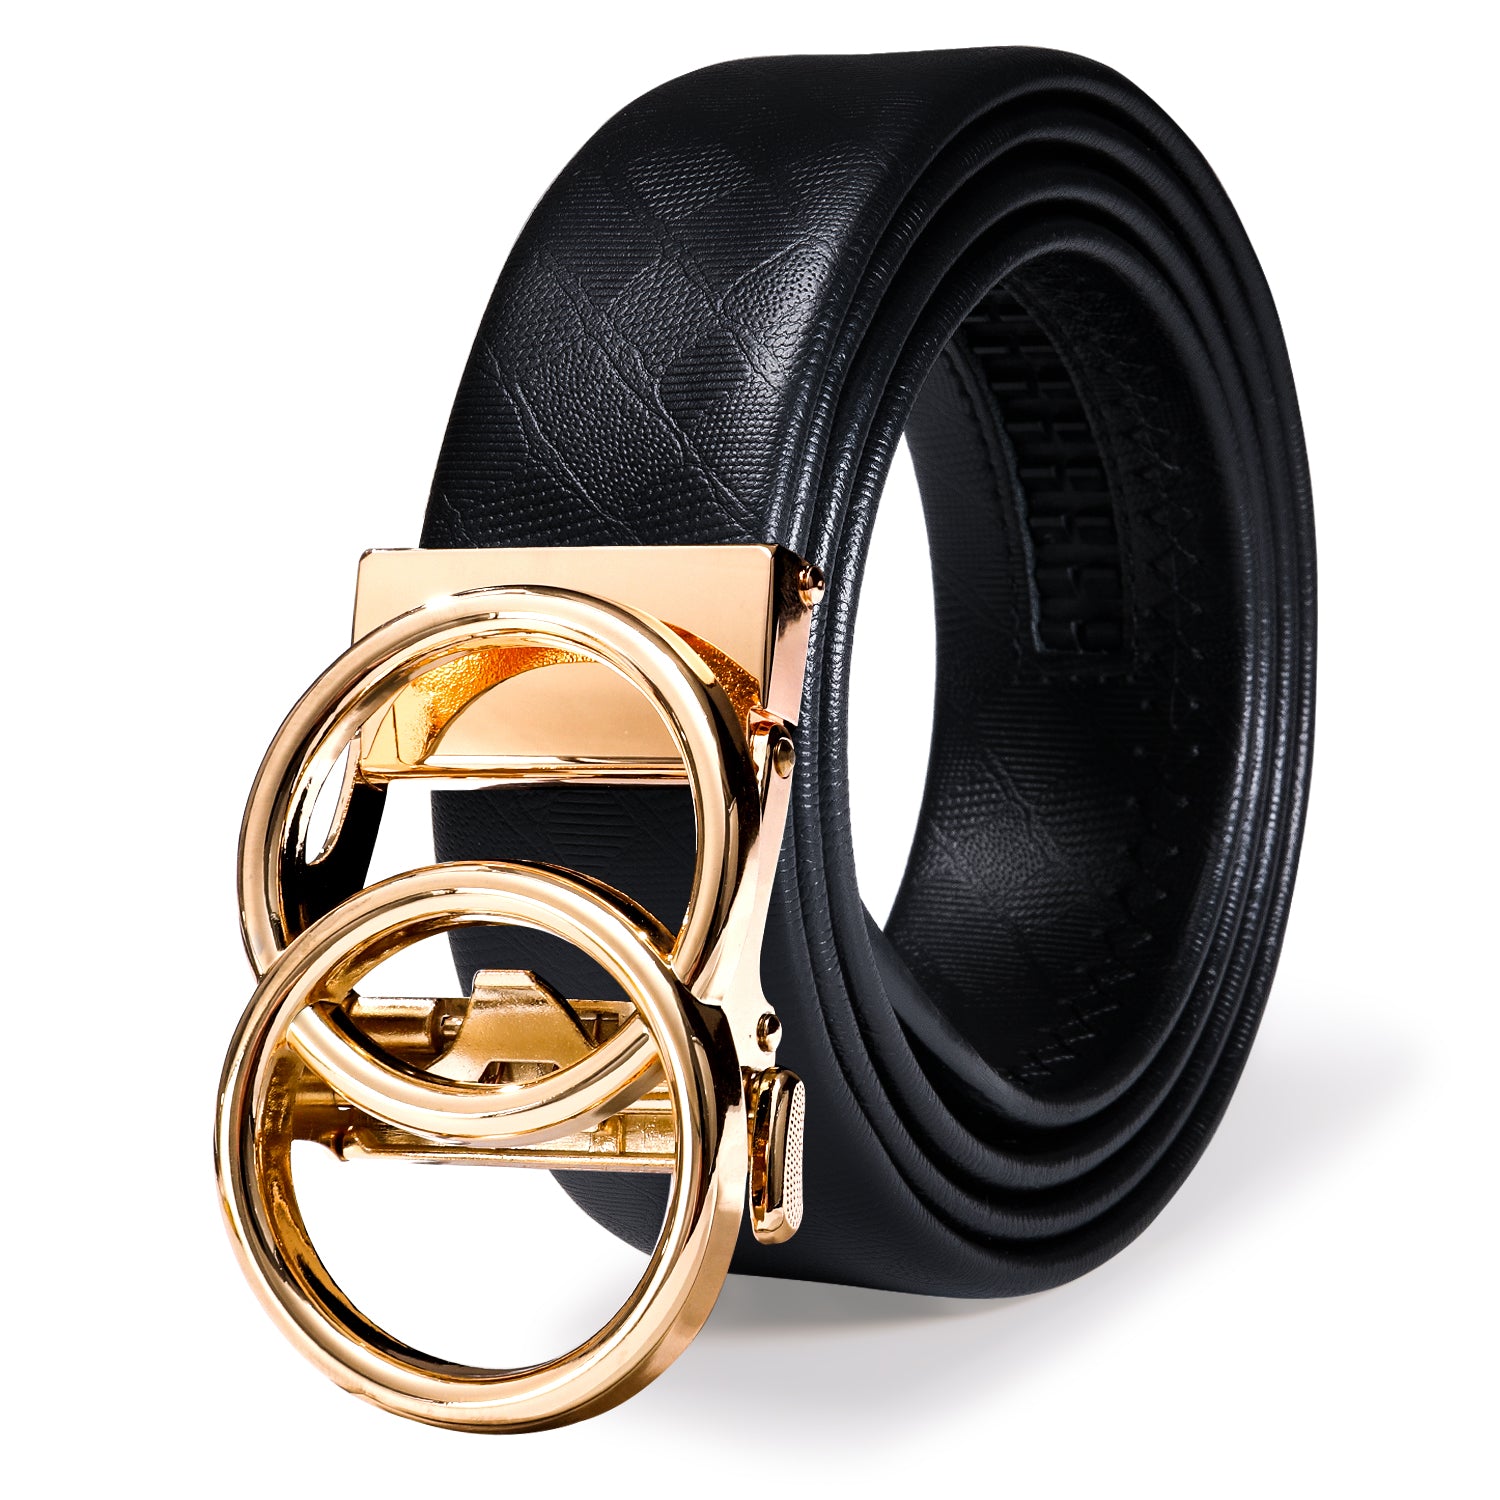 Luxury Circle Metal Buckle Genuine Leather Belt 110cm-160cm